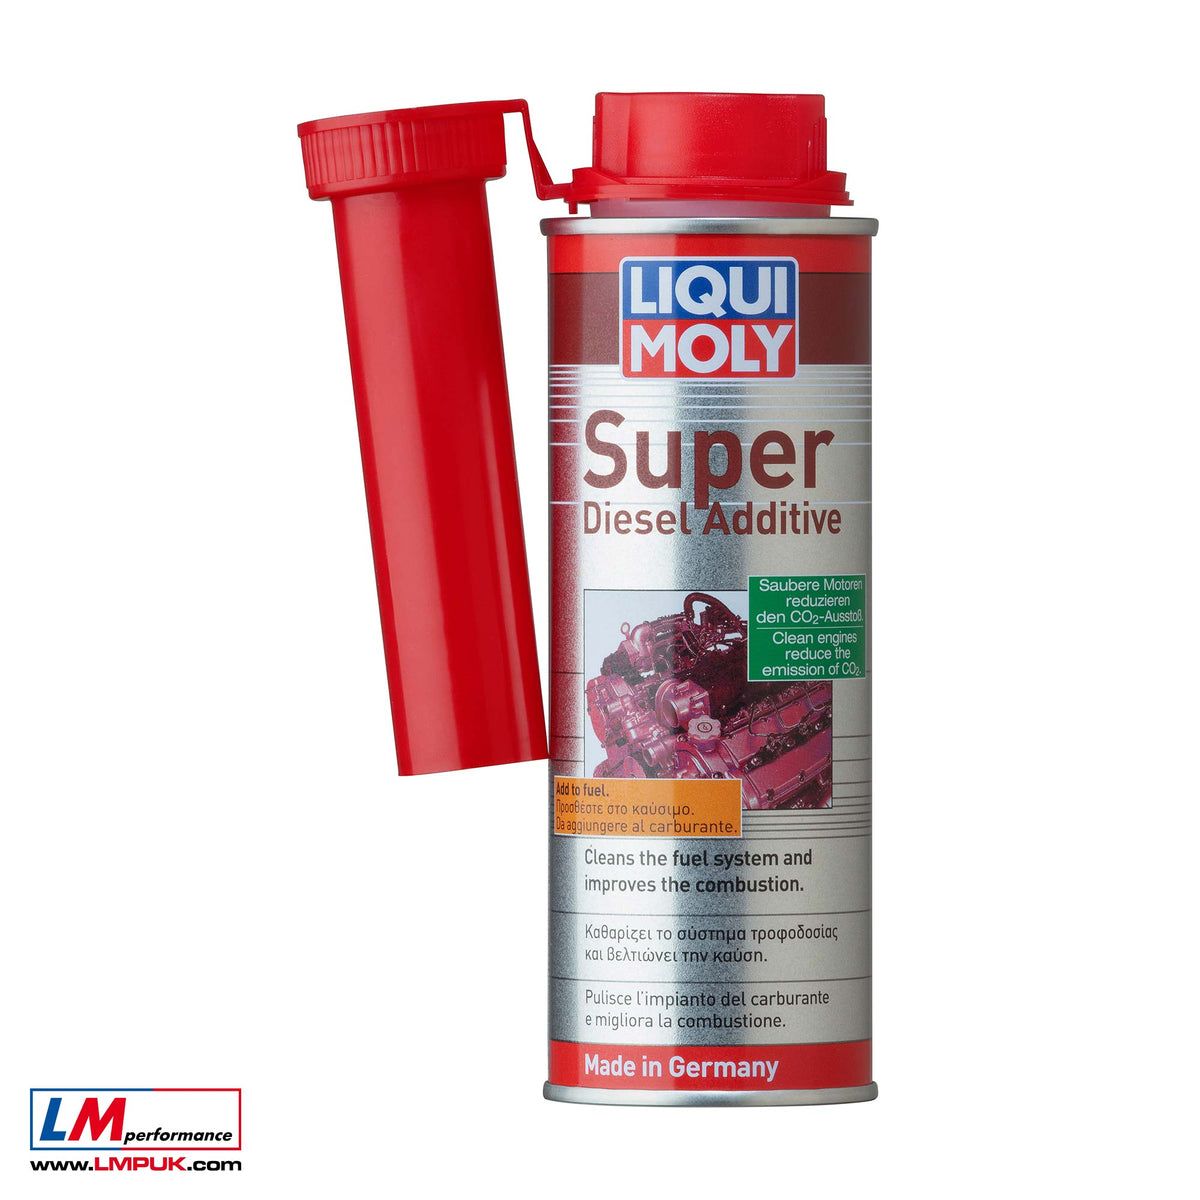 Liqui Moly Pro Line Super Diesel Additive (5176)